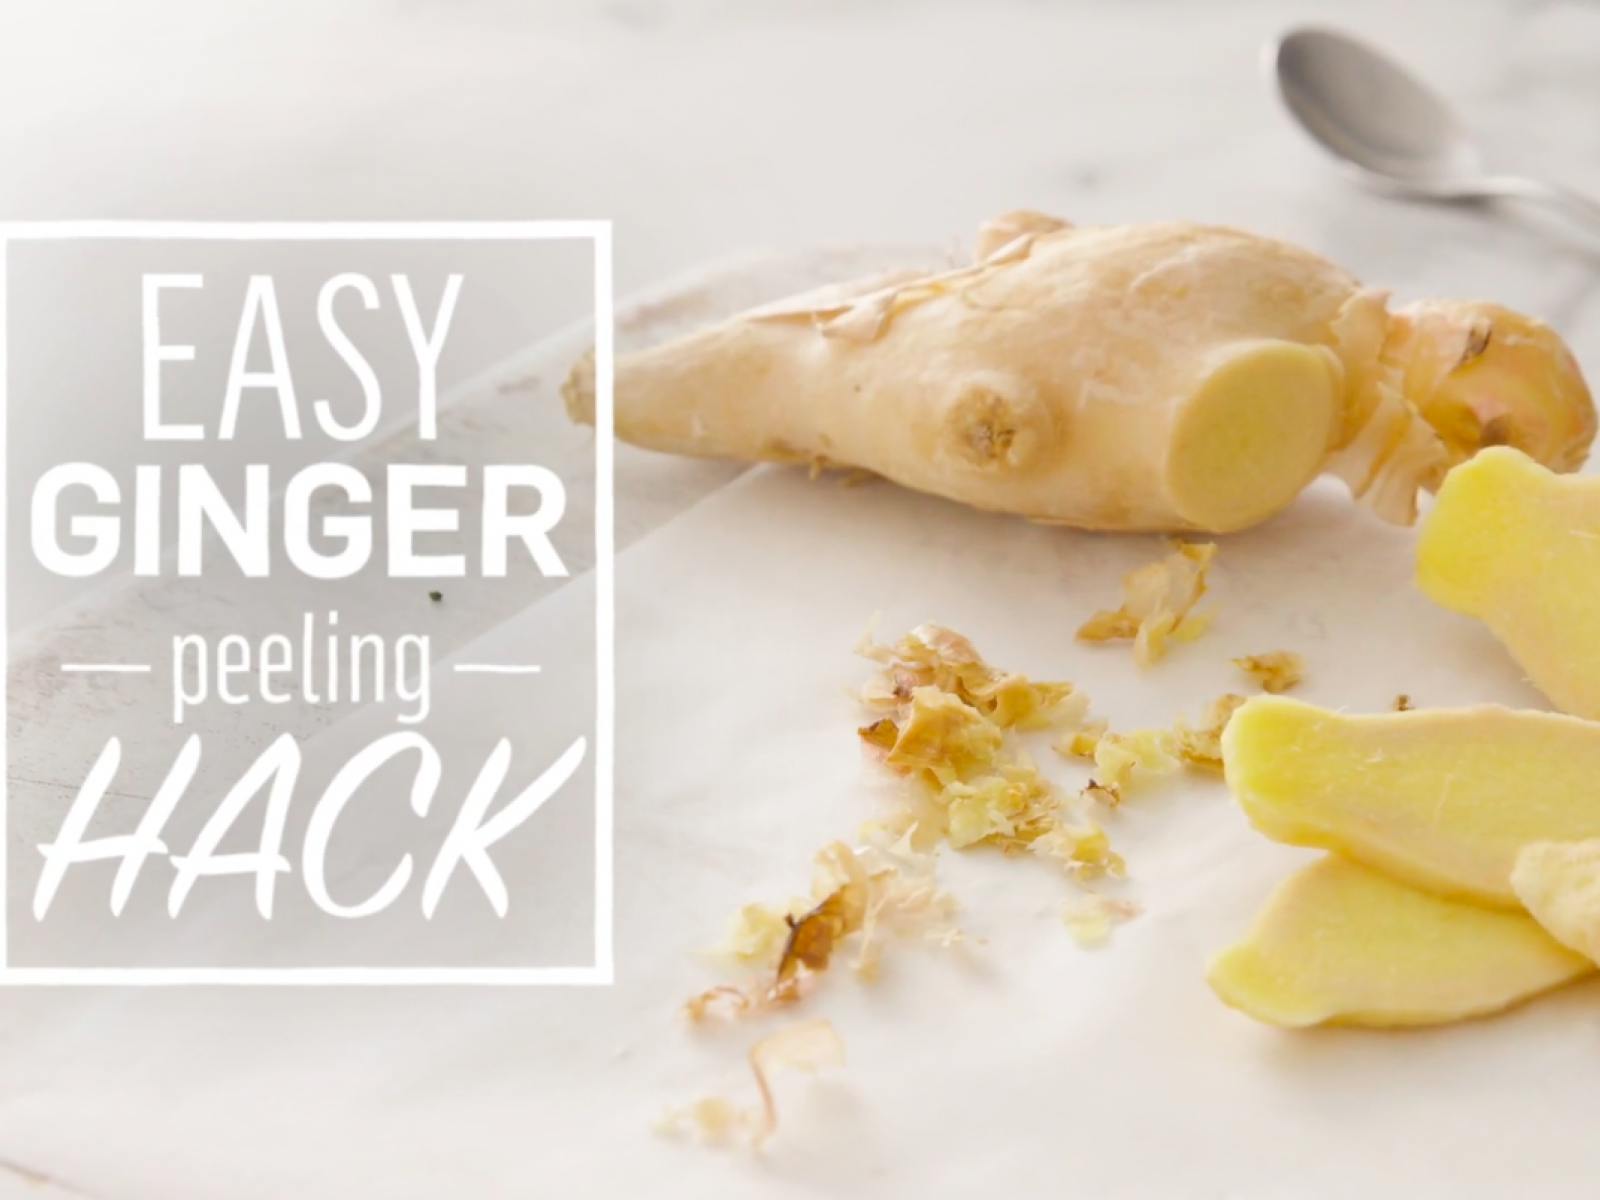 Kitchen hack: Peel ginger this way to reap maximum health benefits